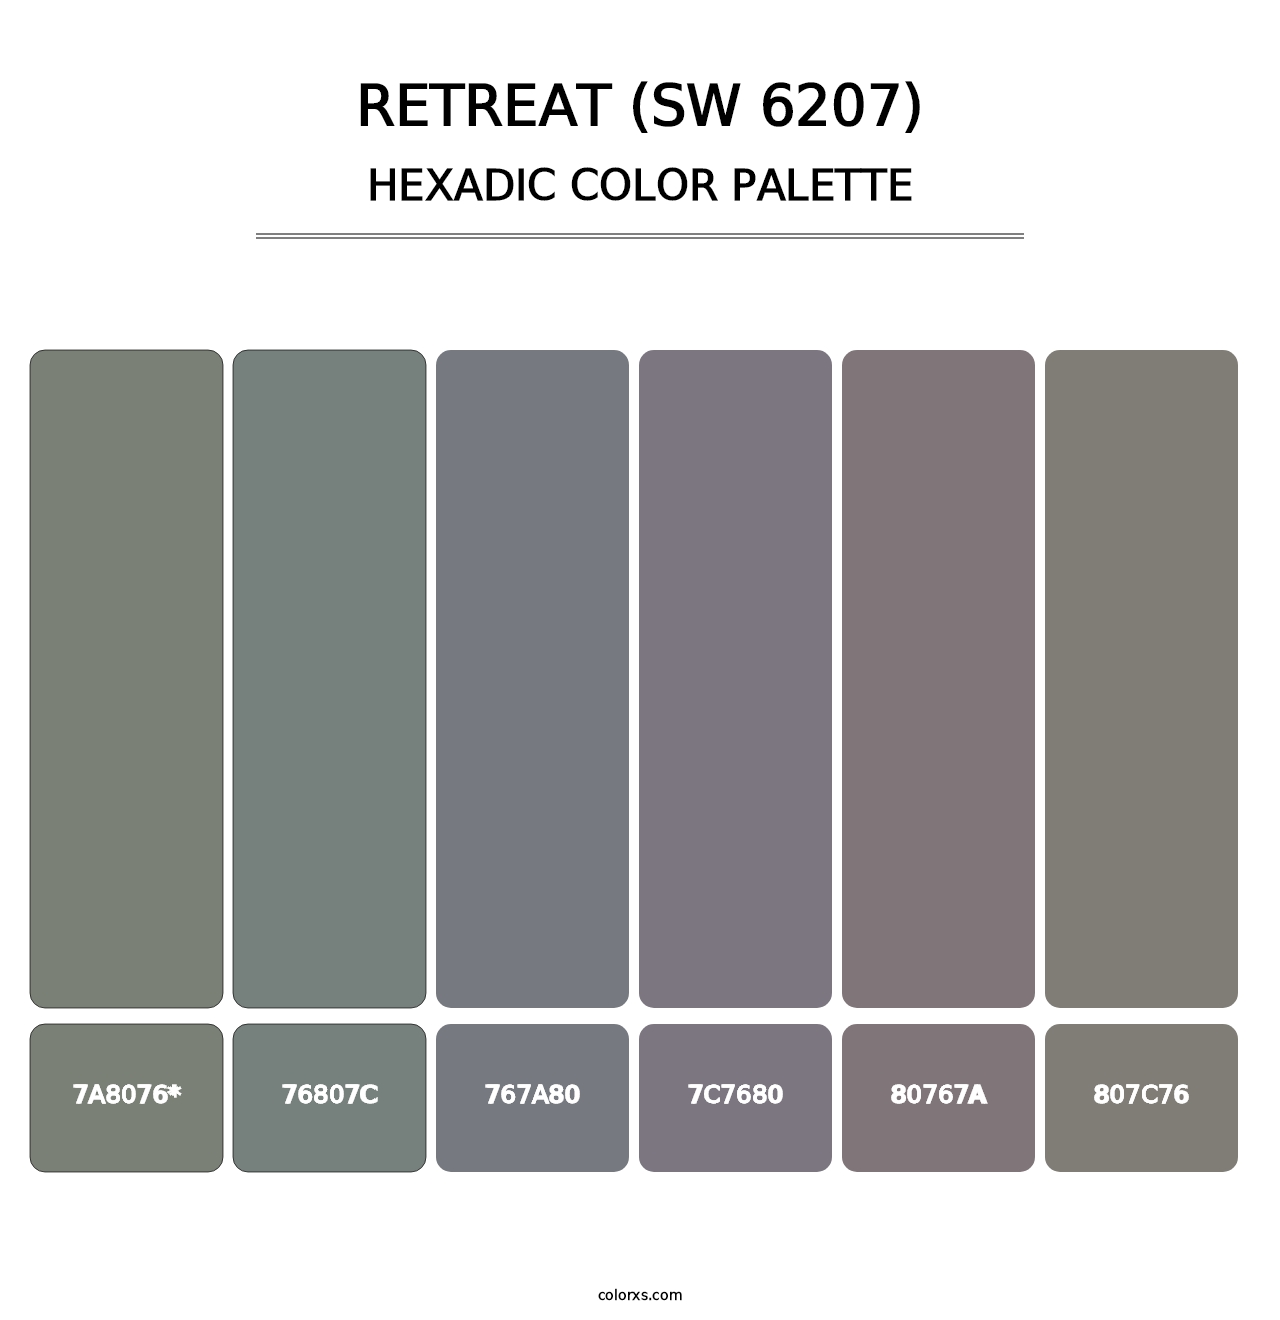 Retreat (SW 6207) - Hexadic Color Palette